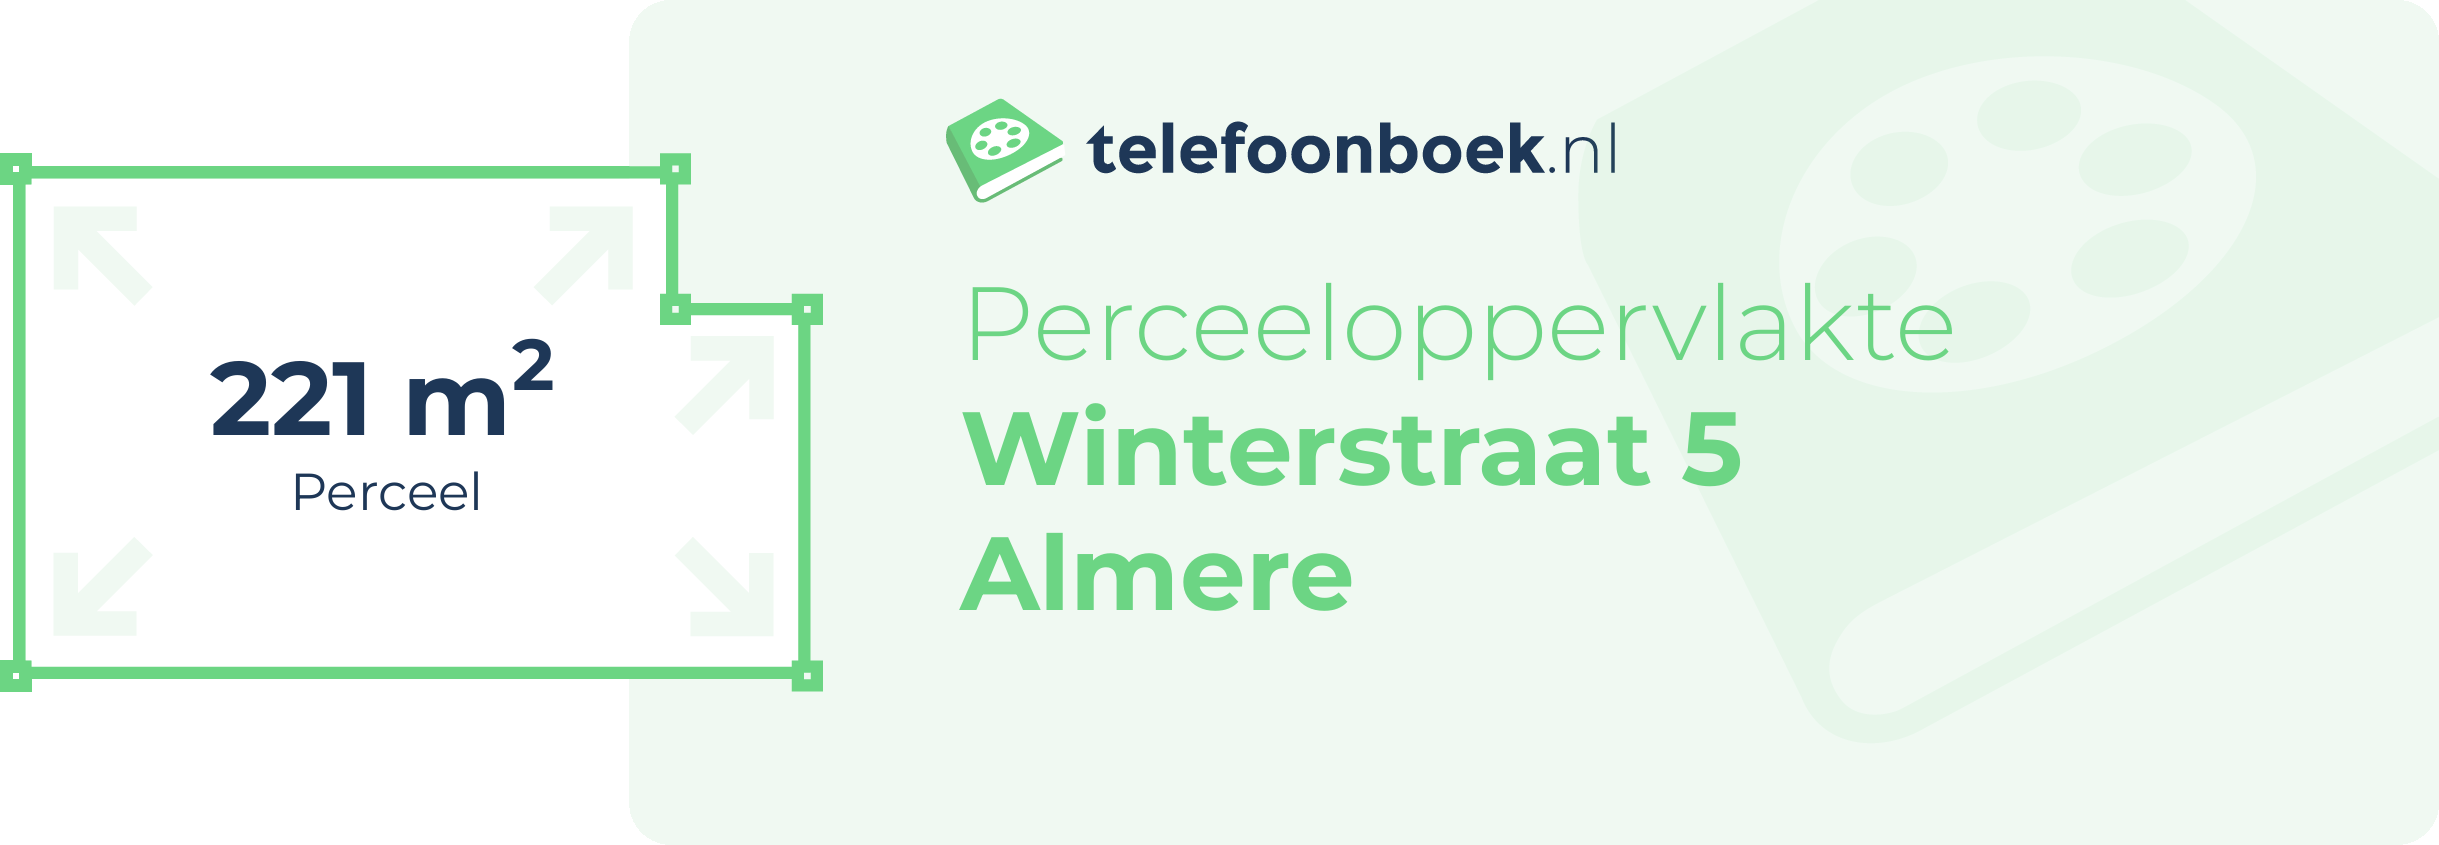 Perceeloppervlakte Winterstraat 5 Almere